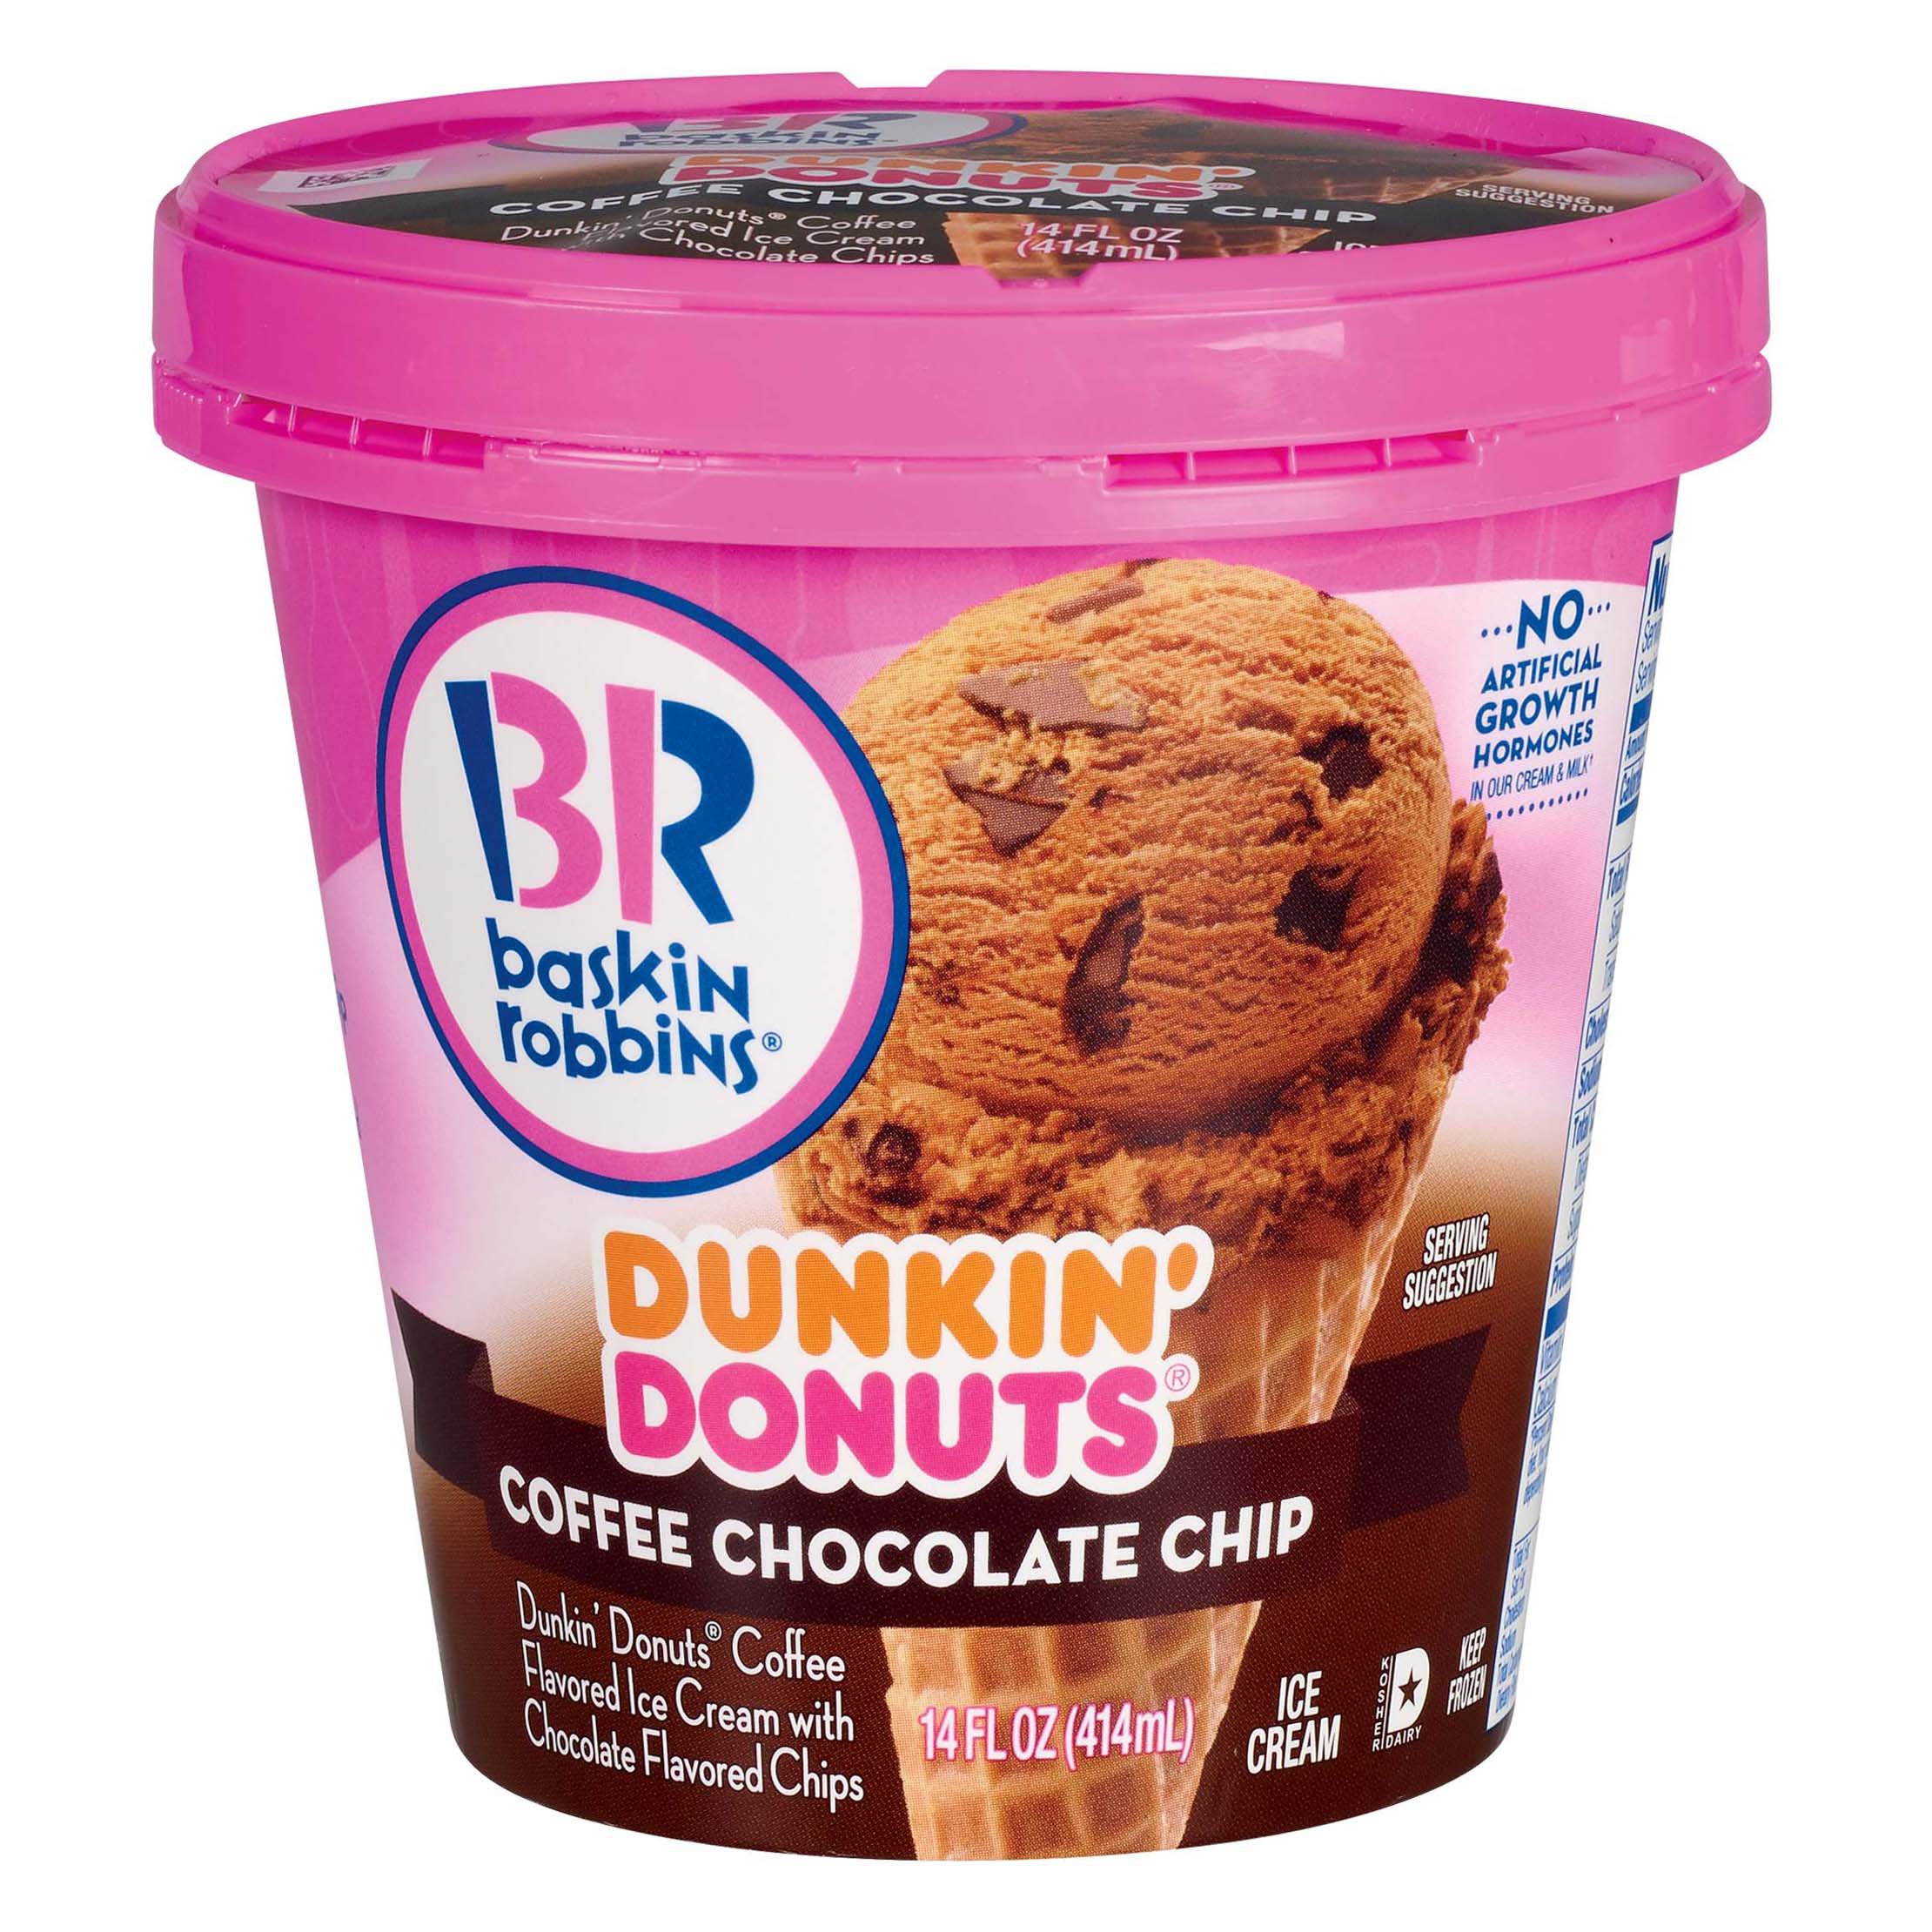 baskin-robbins-dunkin-donuts-coffee-chocolate-chip-ice-cream-shop